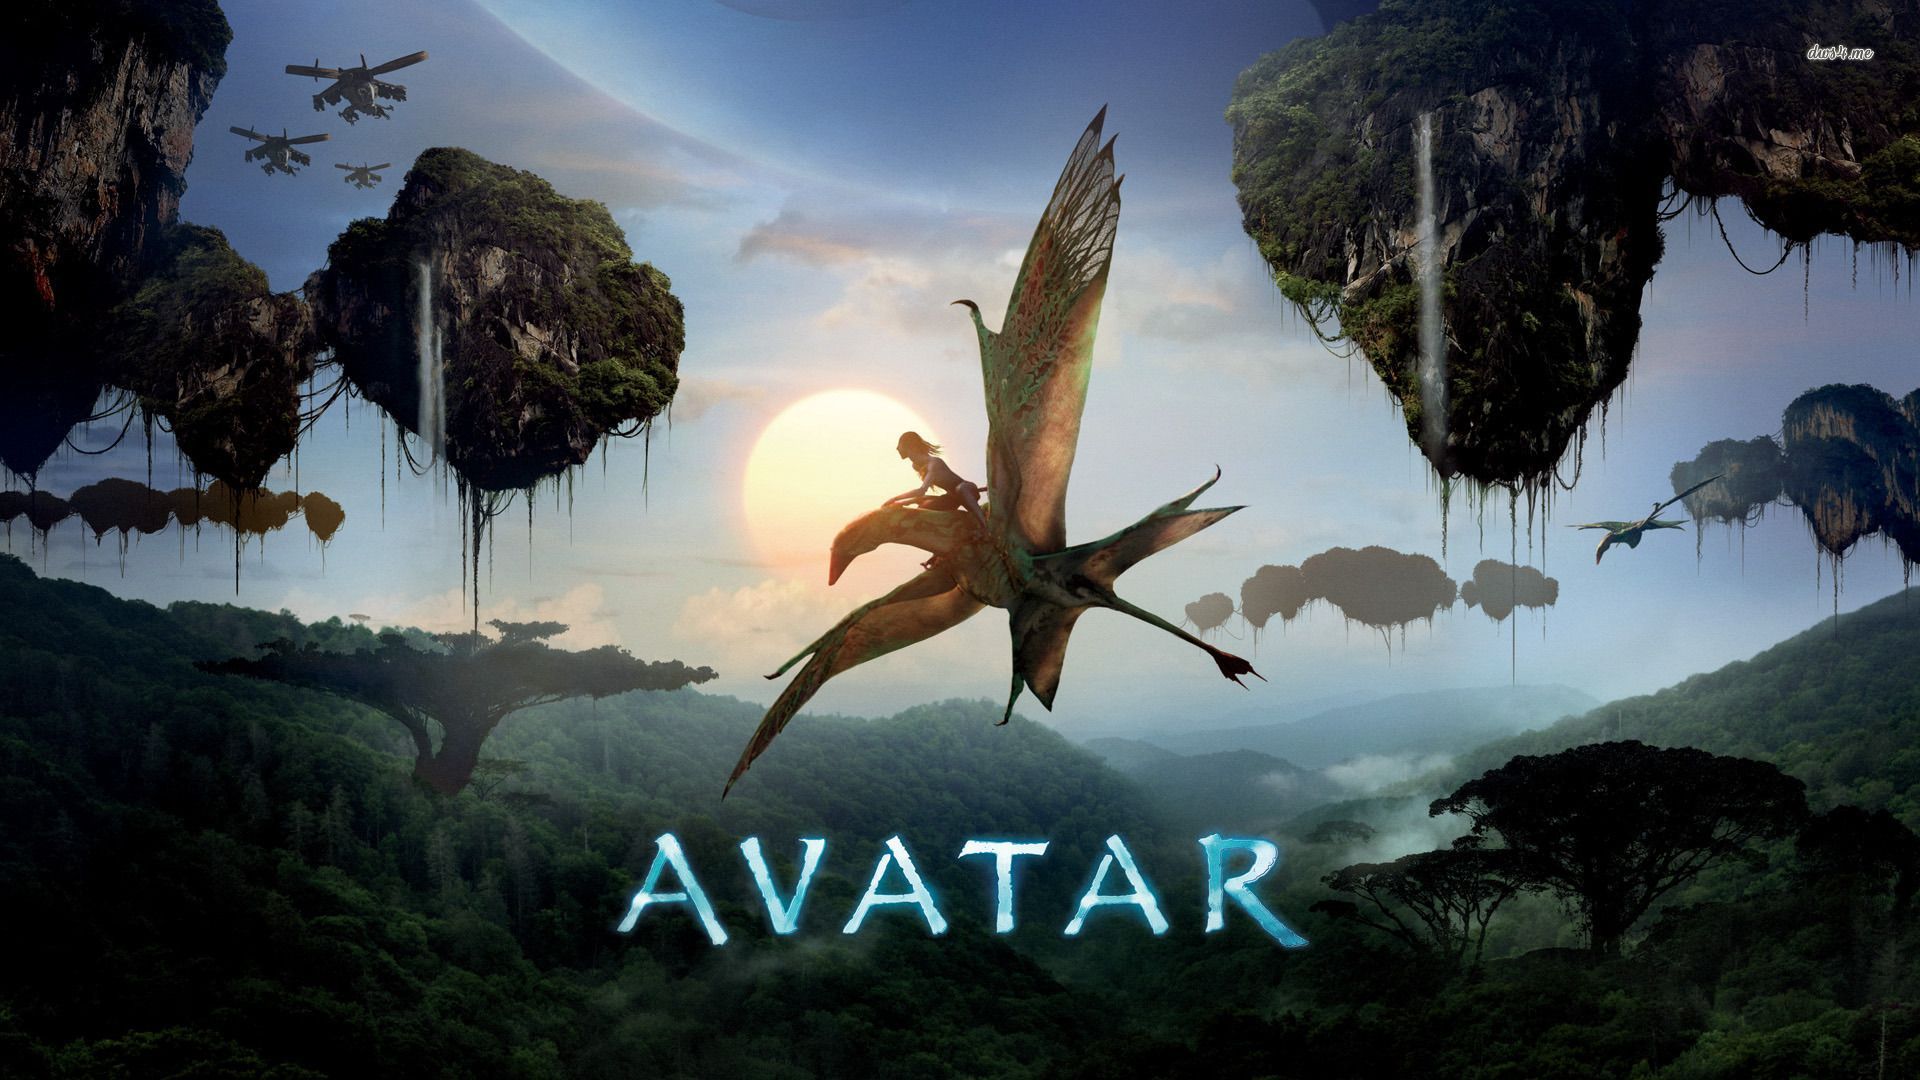 avatar movie wallpaper free download #18